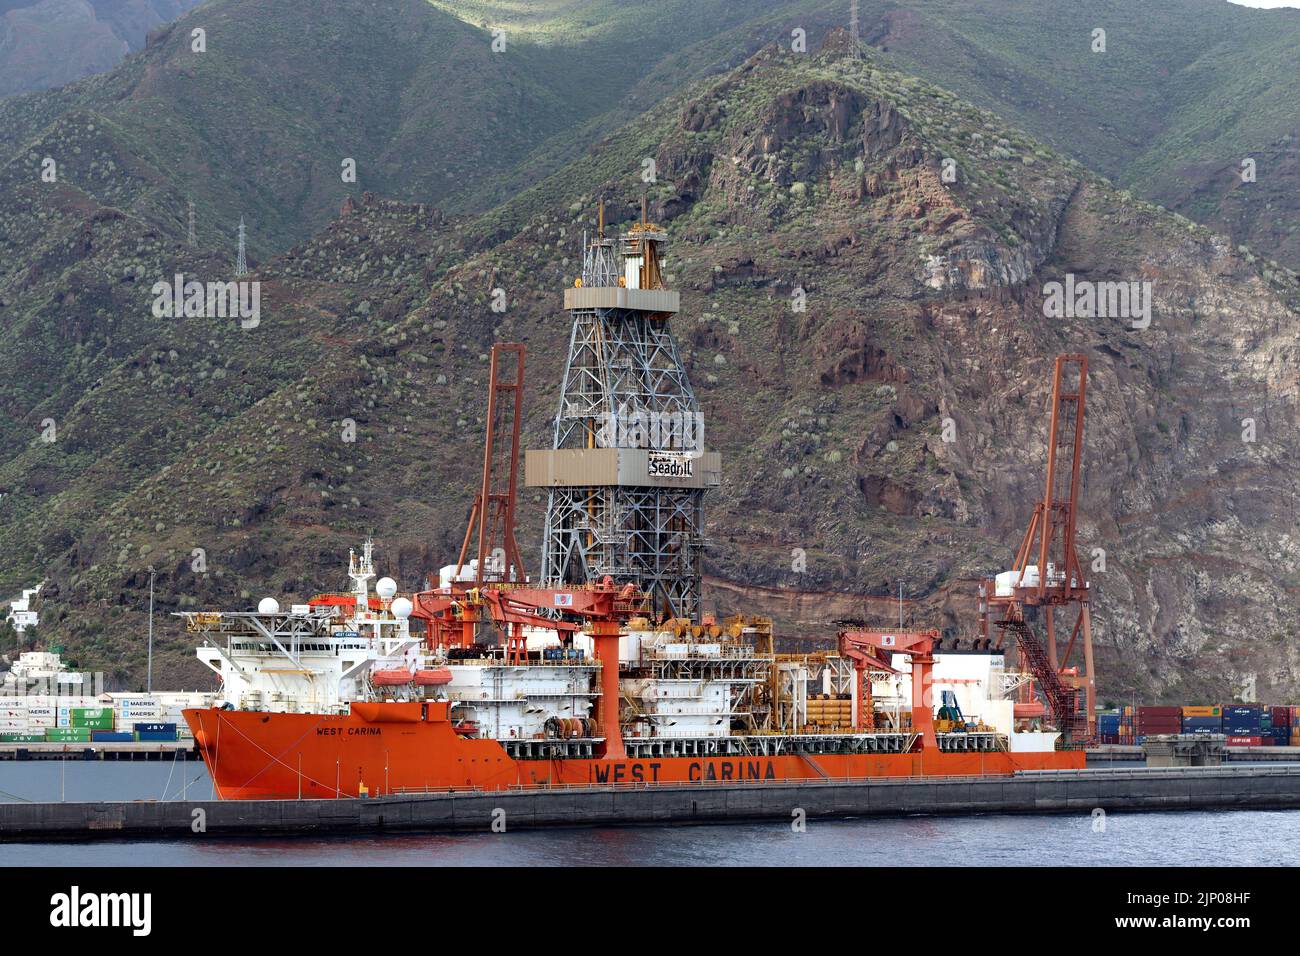 West Carina, a 60,000 ton drilling ship owned by Seadrill Carina Ltd, berthed at Santa Cruz, Tenerife, Canary Islands. Stock Photo